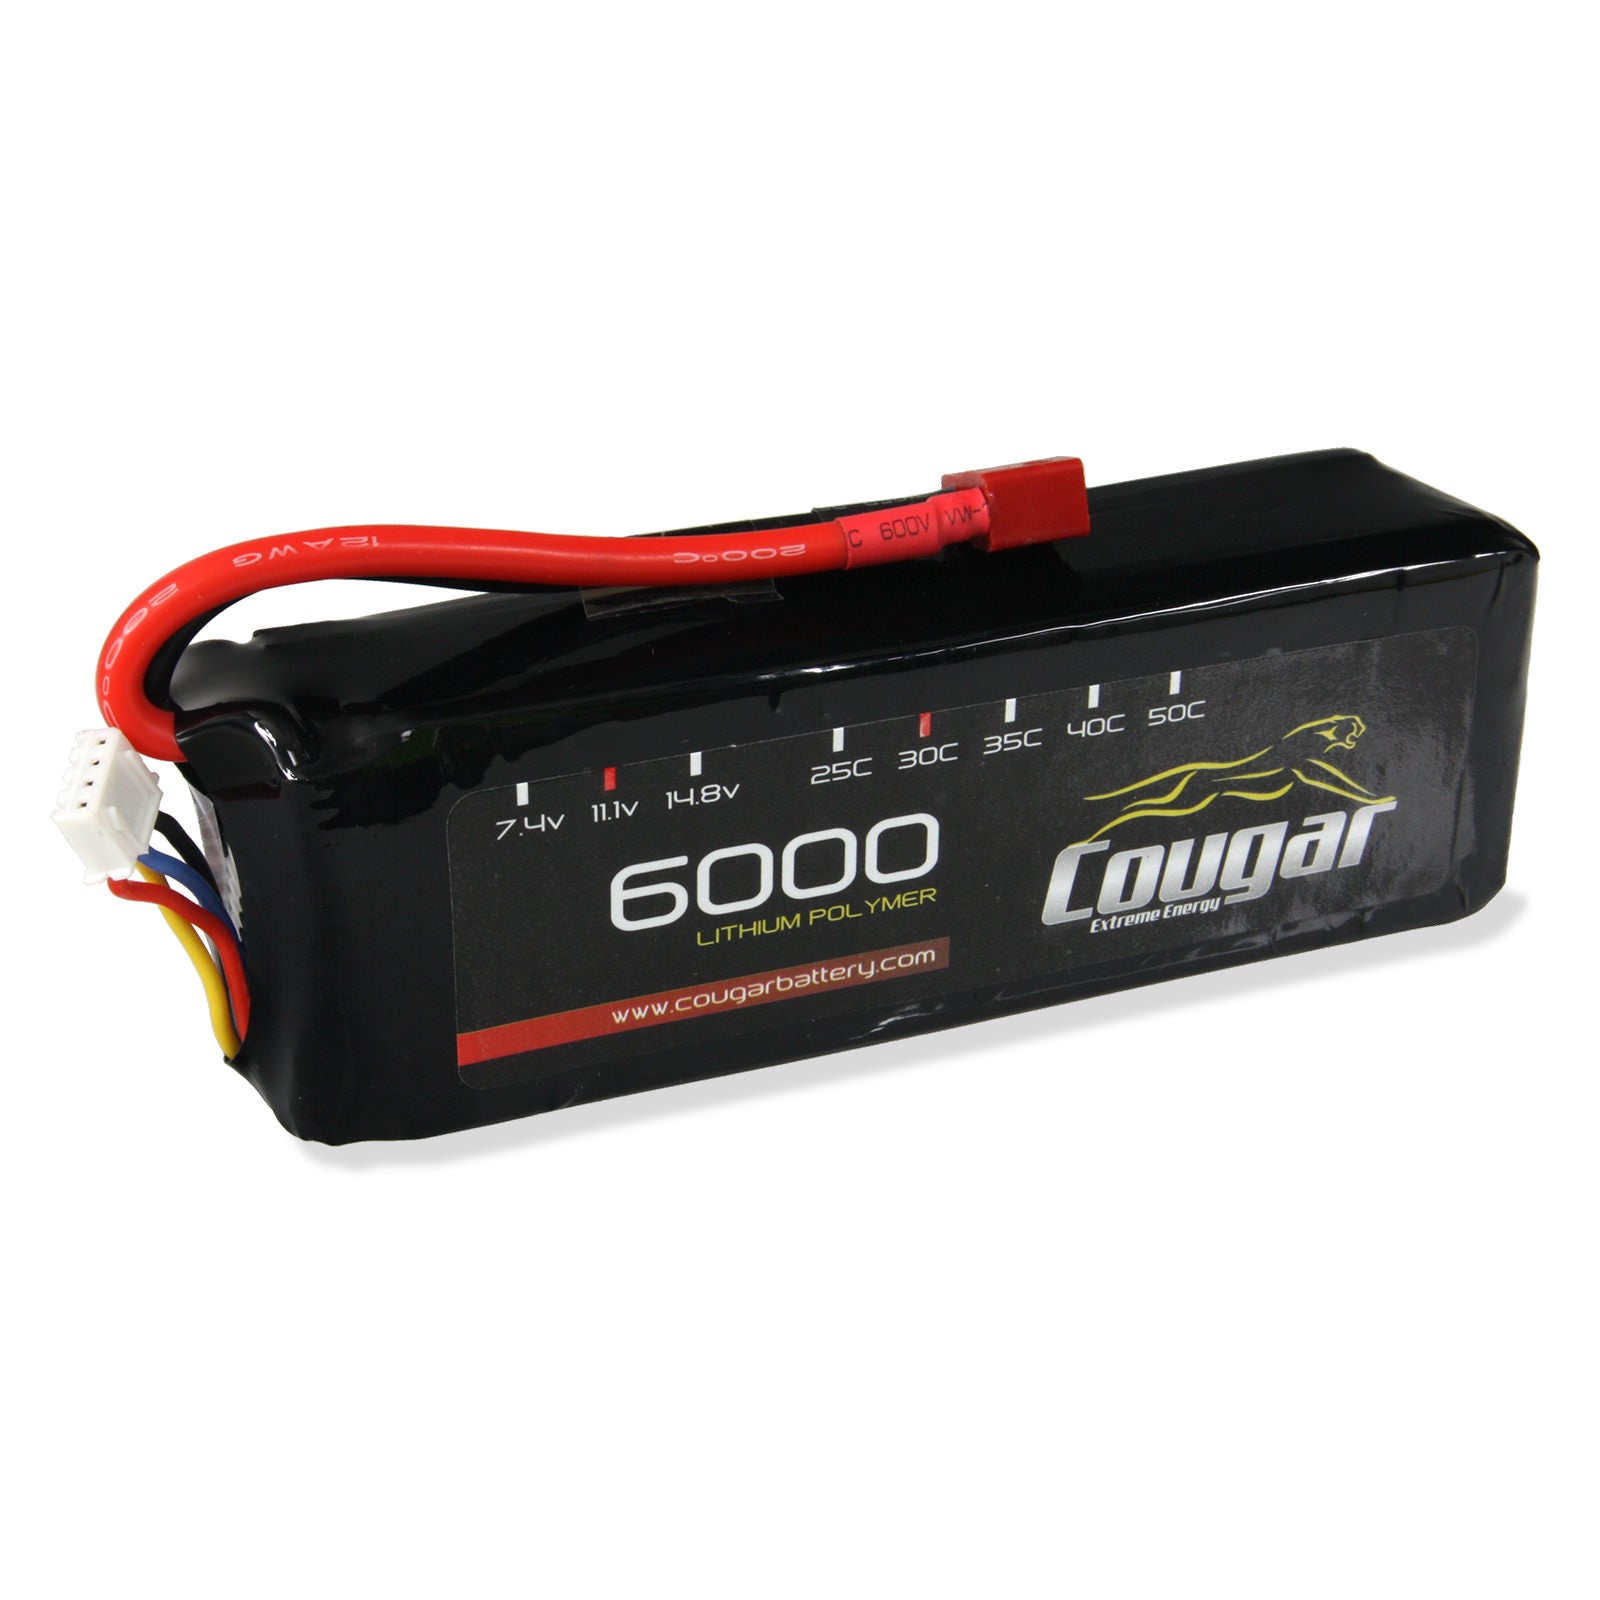 Cougar 6000mAh 11.1v 3S 30C Soft Case LiPo Battery